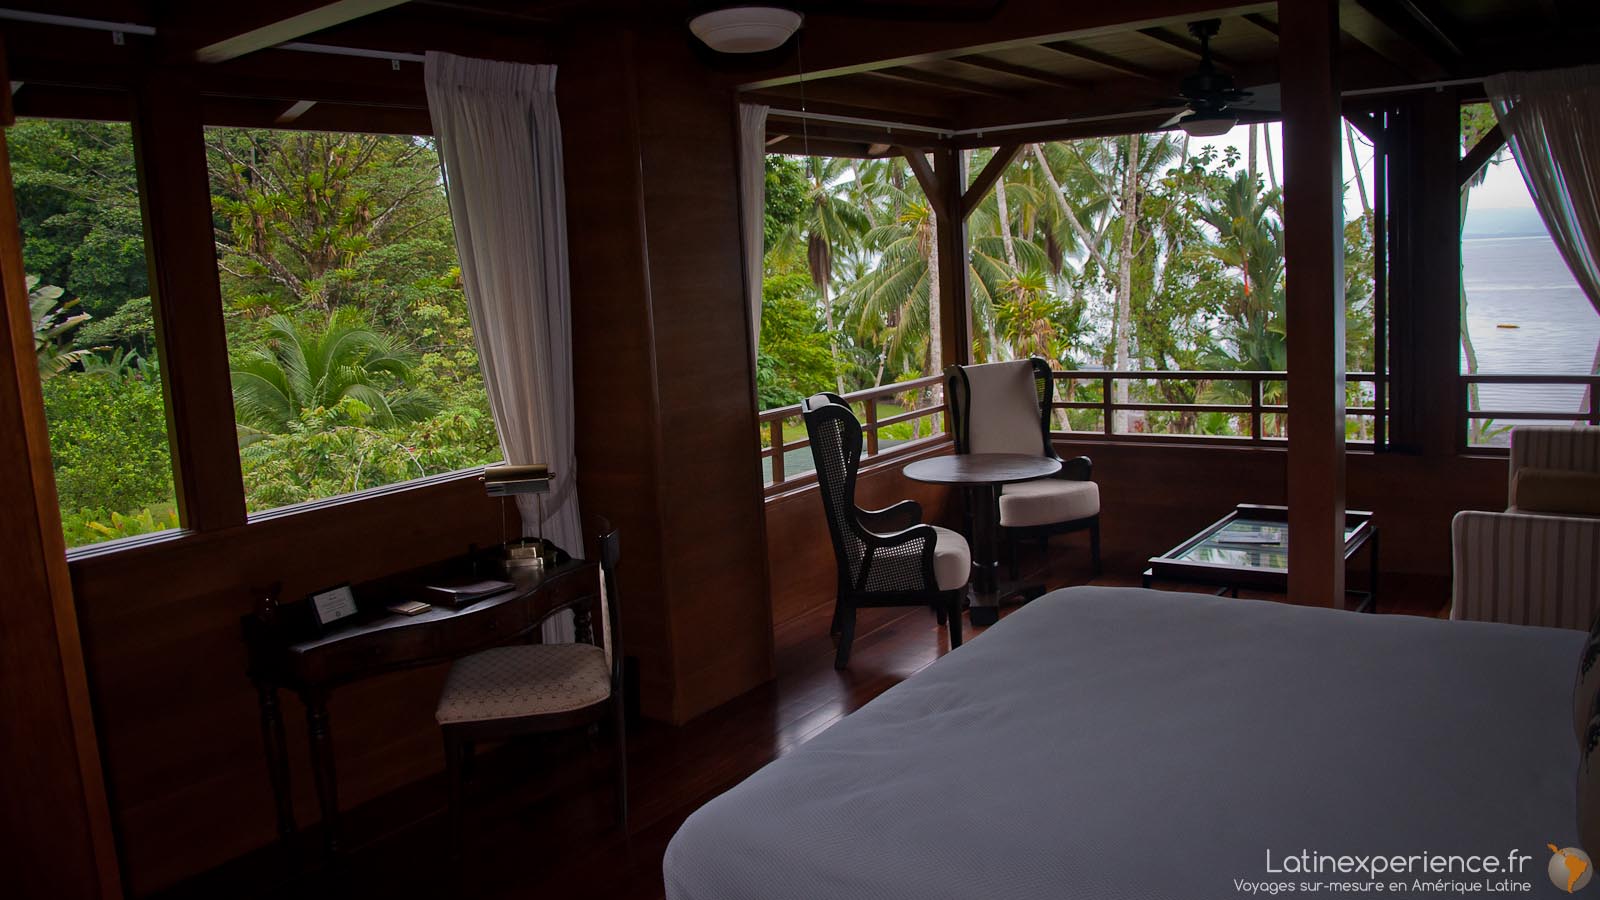 costa Rica - Golfo Dulce - hôtel luxe - Cativo lodge - Latinexperience voyage